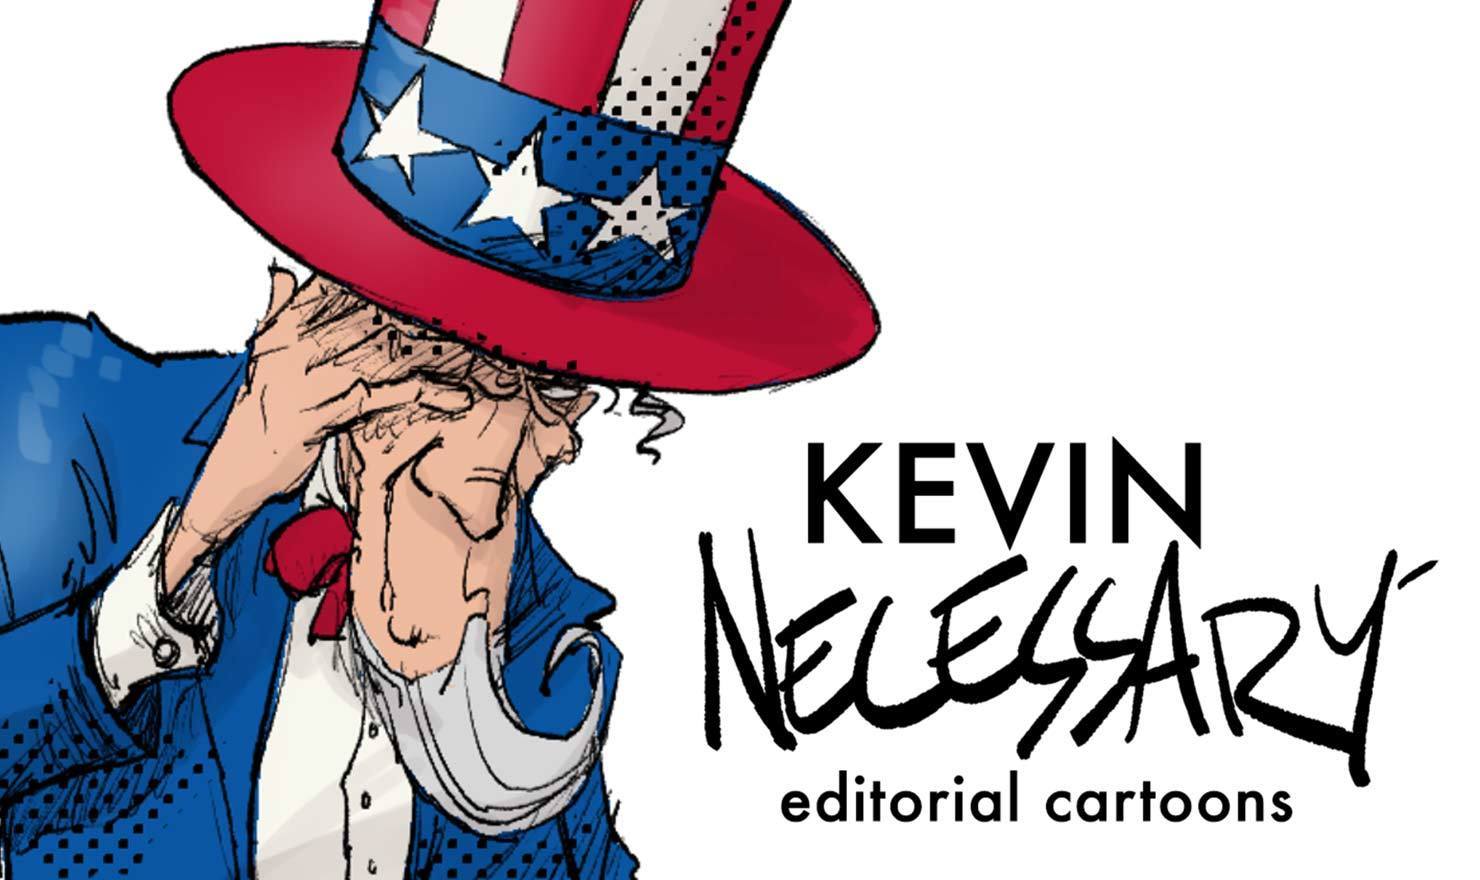 New Comic Alert: 'Kevin Necessary Editorial Cartoons'